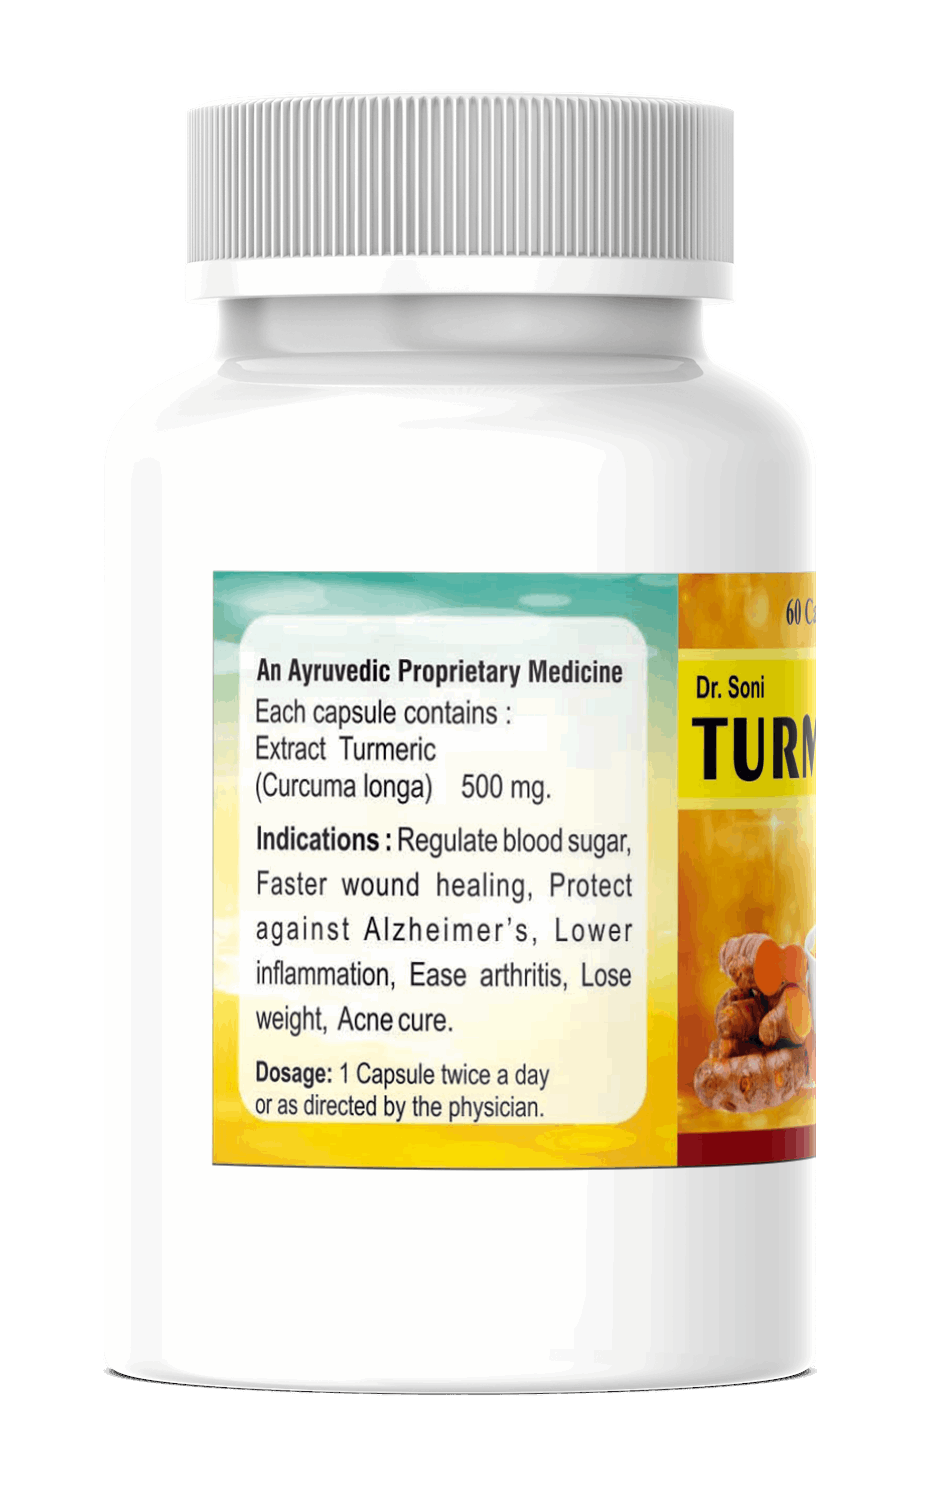 - 60 Capsules Pack of 1 Extract Capsule,Turmeric curcumin,Alzheimer's,Anti-bacteria,Anti-cancer,Anti-inflammatory,Antibacterial,Antifungal,properties,Antioxidant enzymes,Bioactive Compunds,curcumin,Depression,Turmeric